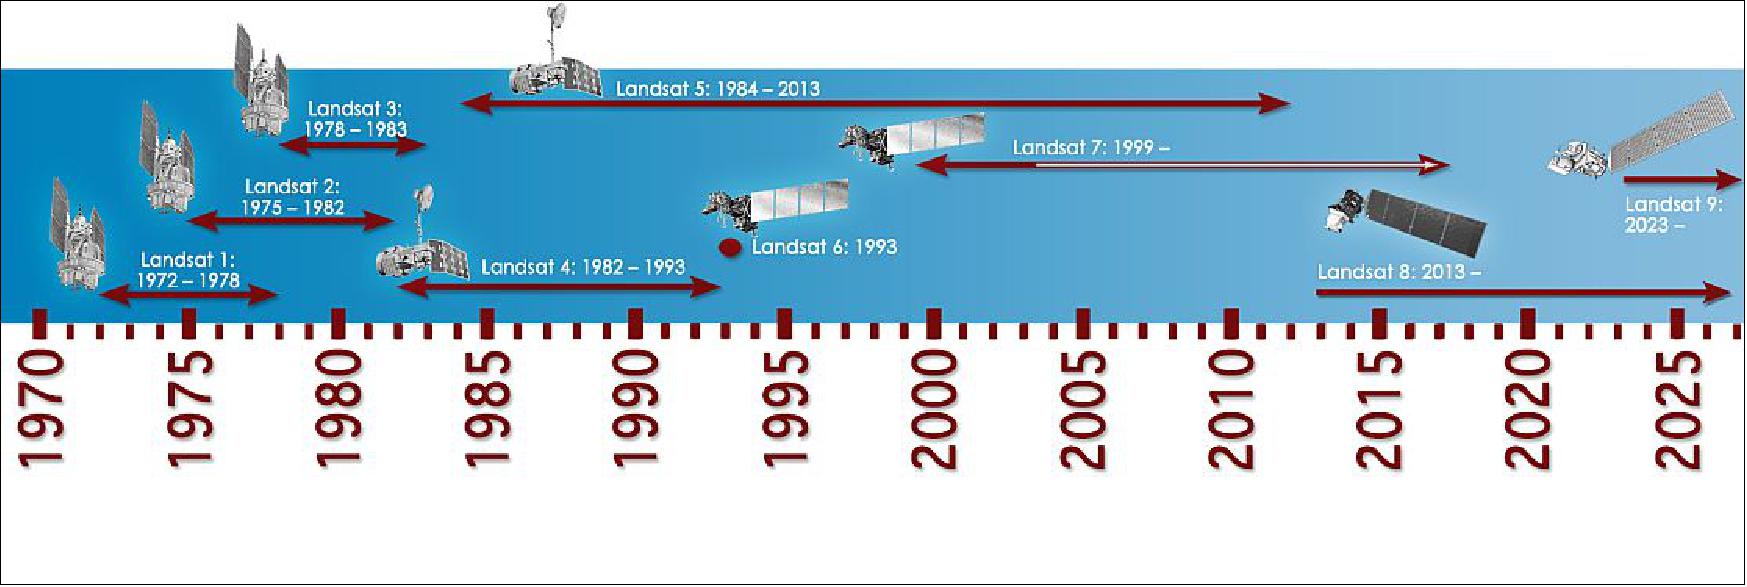 Figure 1: History of the Landsat program (image credit: NASA) 13)